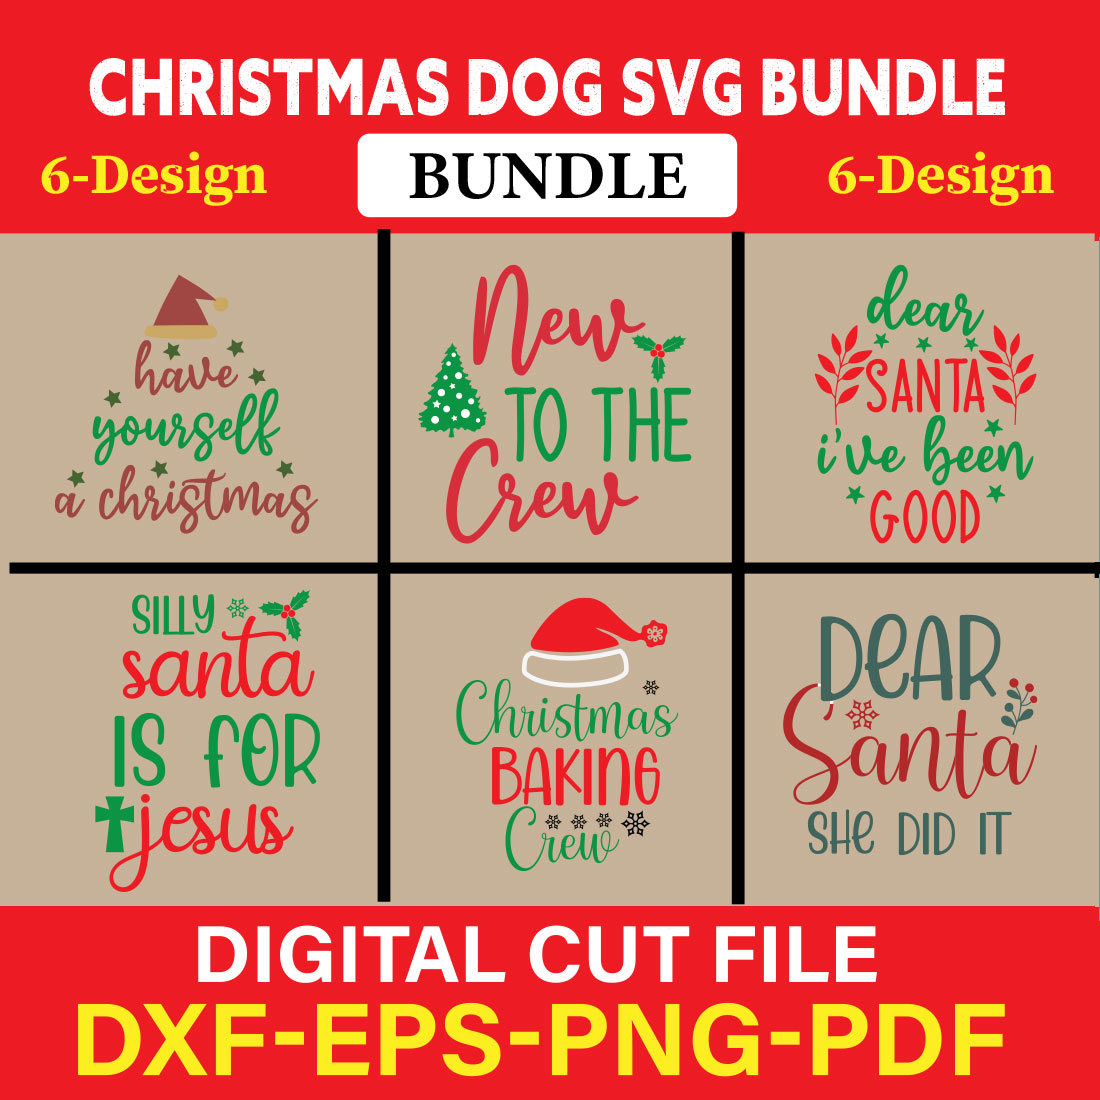 Christmas SVG Bundle / Funny Christmas SVG / Cut File vol-28 cover image.